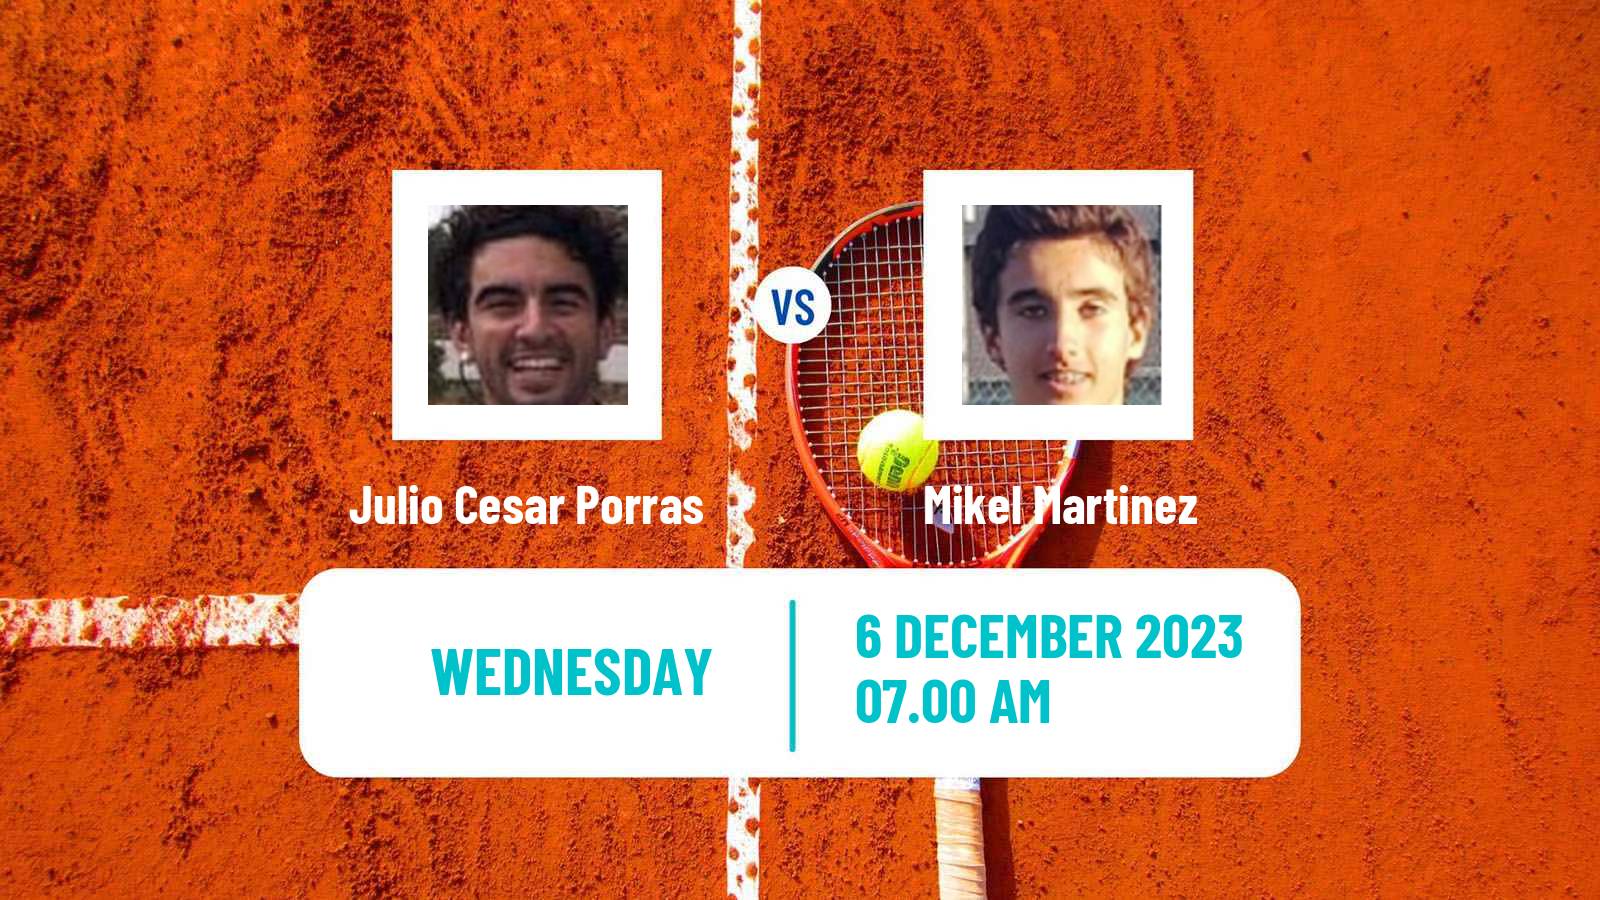 Tennis ITF M15 Madrid 3 Men Julio Cesar Porras - Mikel Martinez